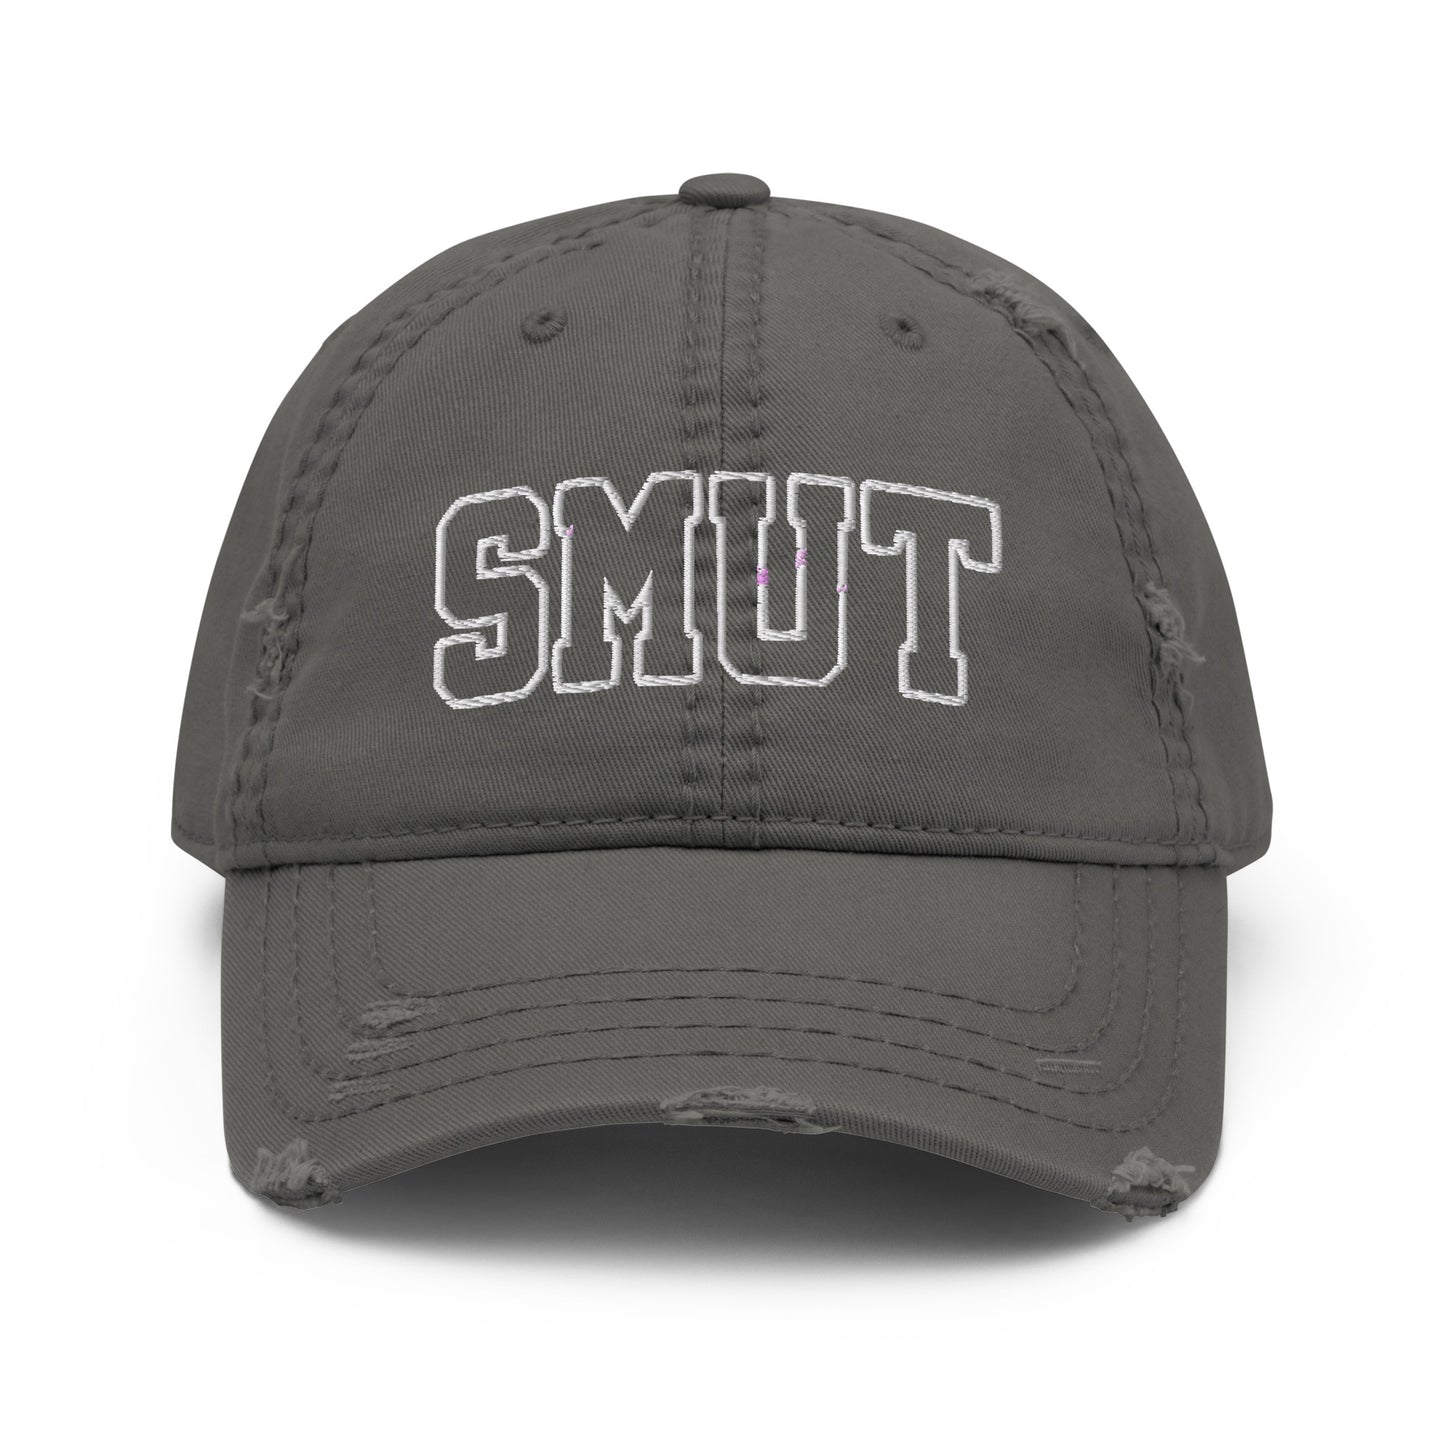 SMUT distressed dad hat